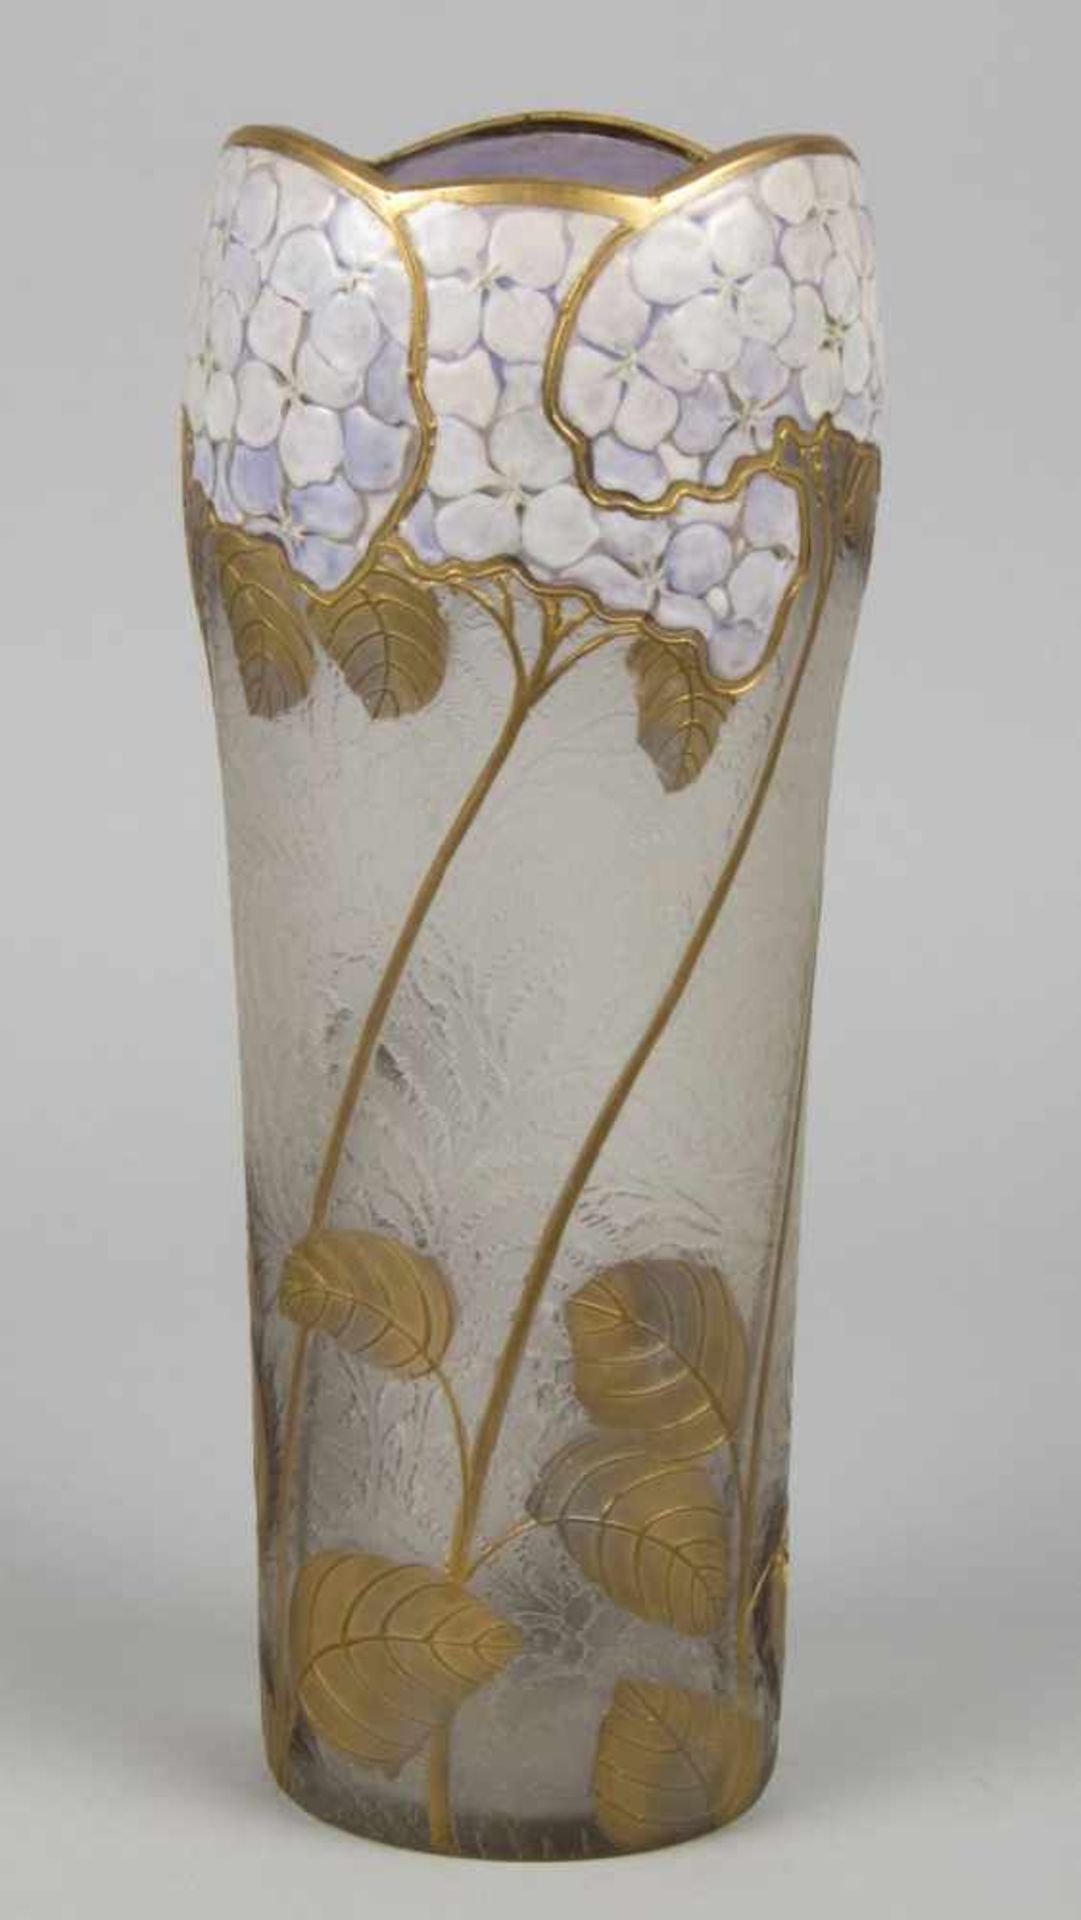 Jugendstil-Vase mit Hortensien-DekorFarbloses Glas. Flächig farnrankenartig geätzte Oberfläche.